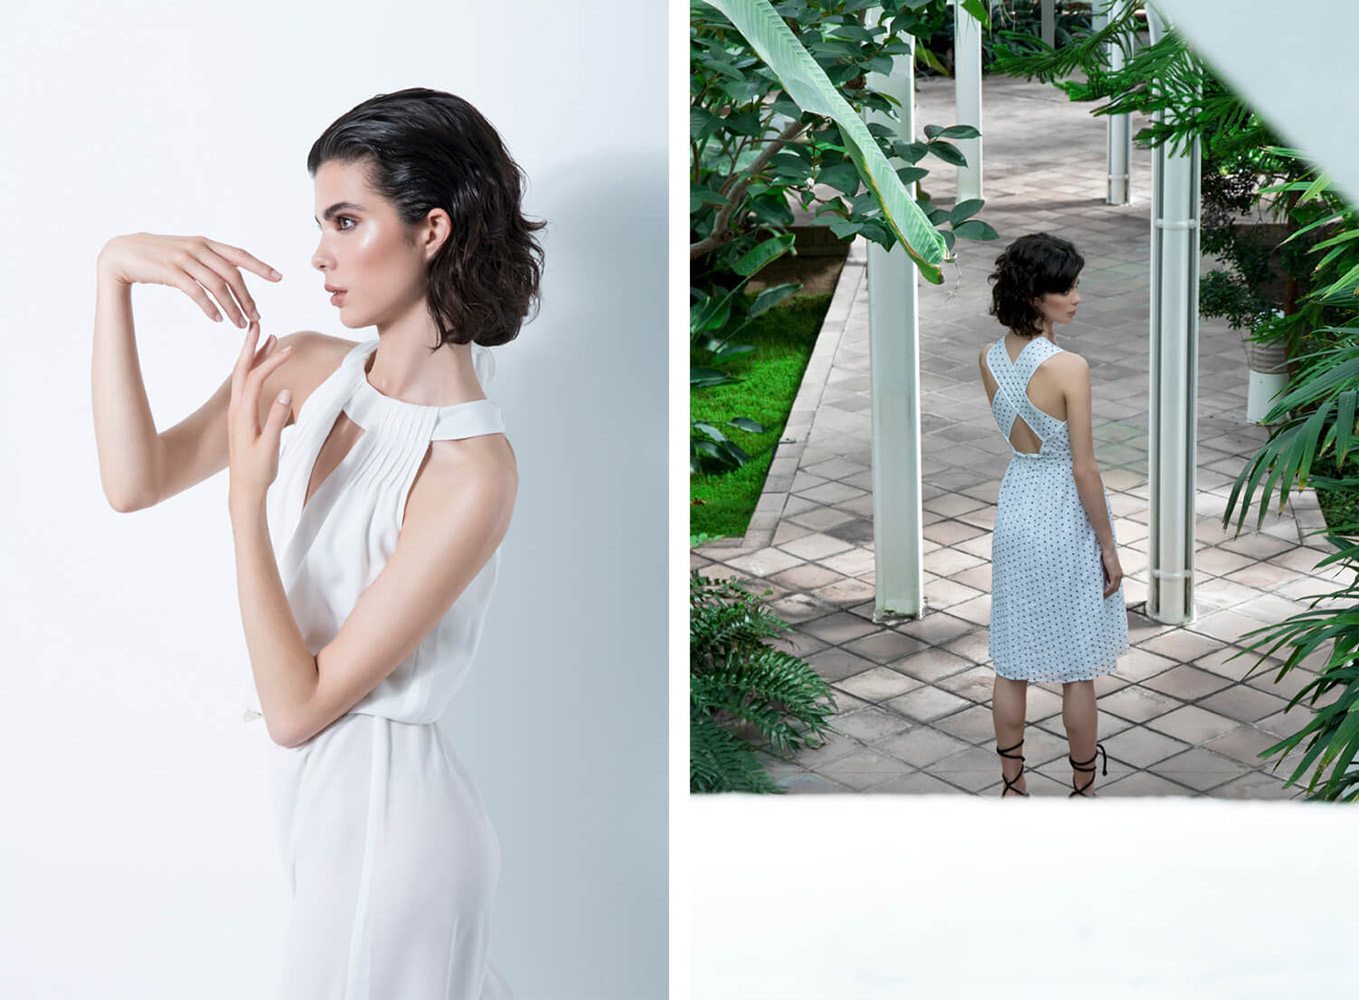 Angel-Ruiz-Ruiz-Fashion-Photographer-Campaign-SS-2017-Archeologie-Back-Straps-White-dress-Jumpsuit-1359x1000